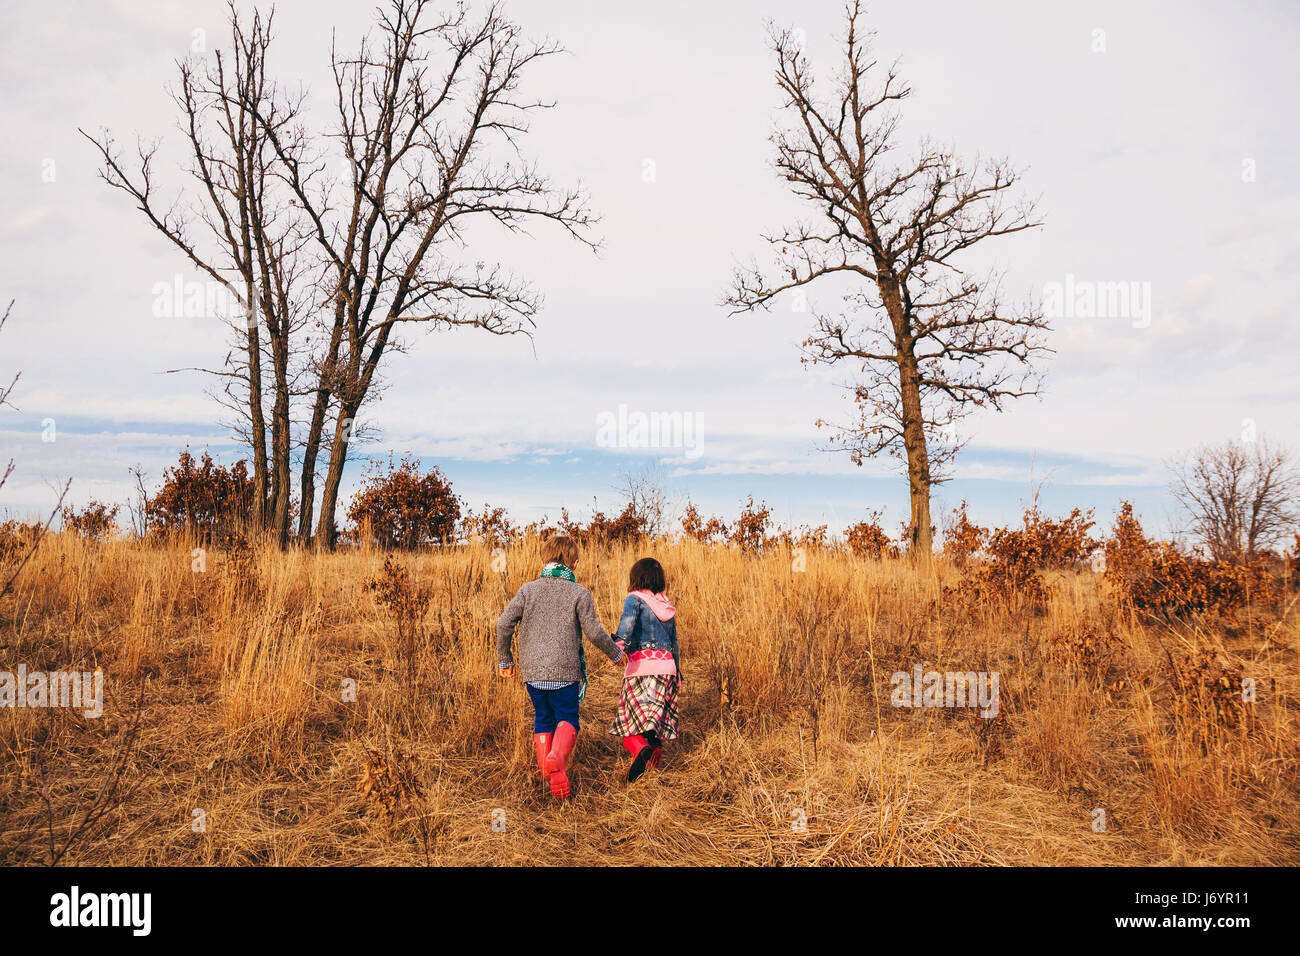 Boy and girl holding hands running in rural landscape Banque D'Images